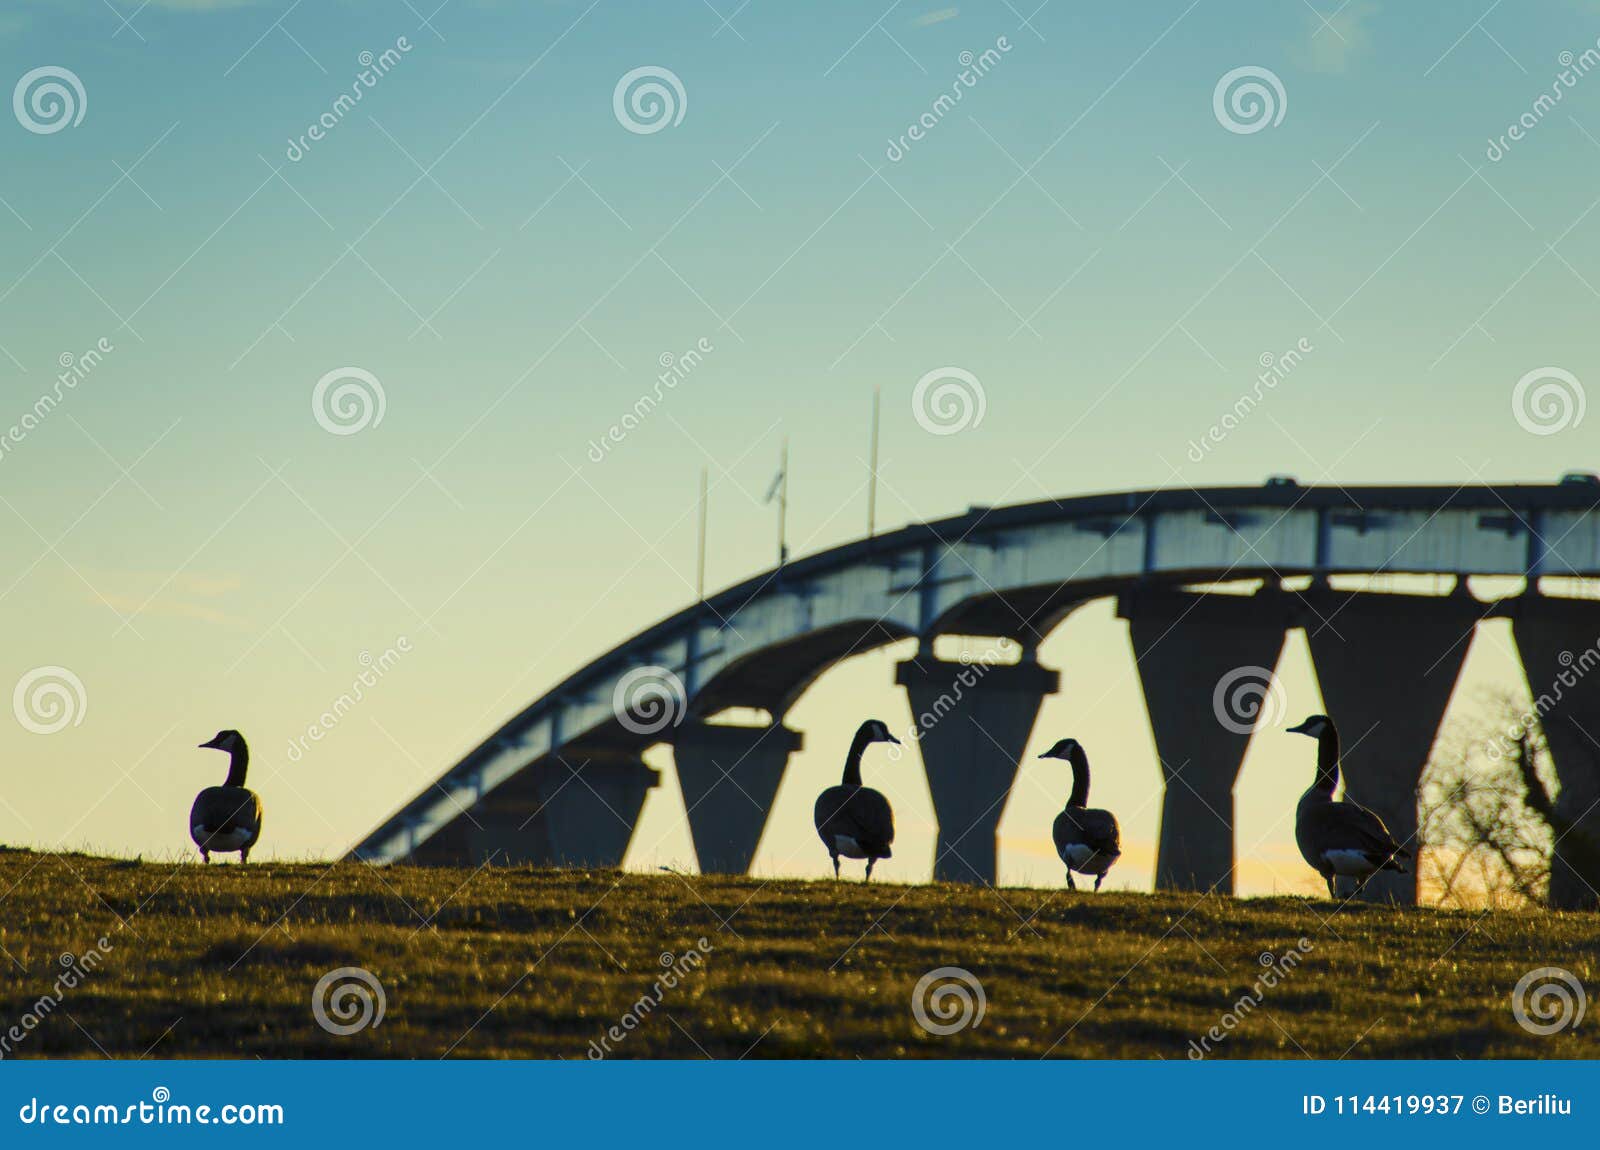 ducks at sunset against the gov thomas johnson bridge